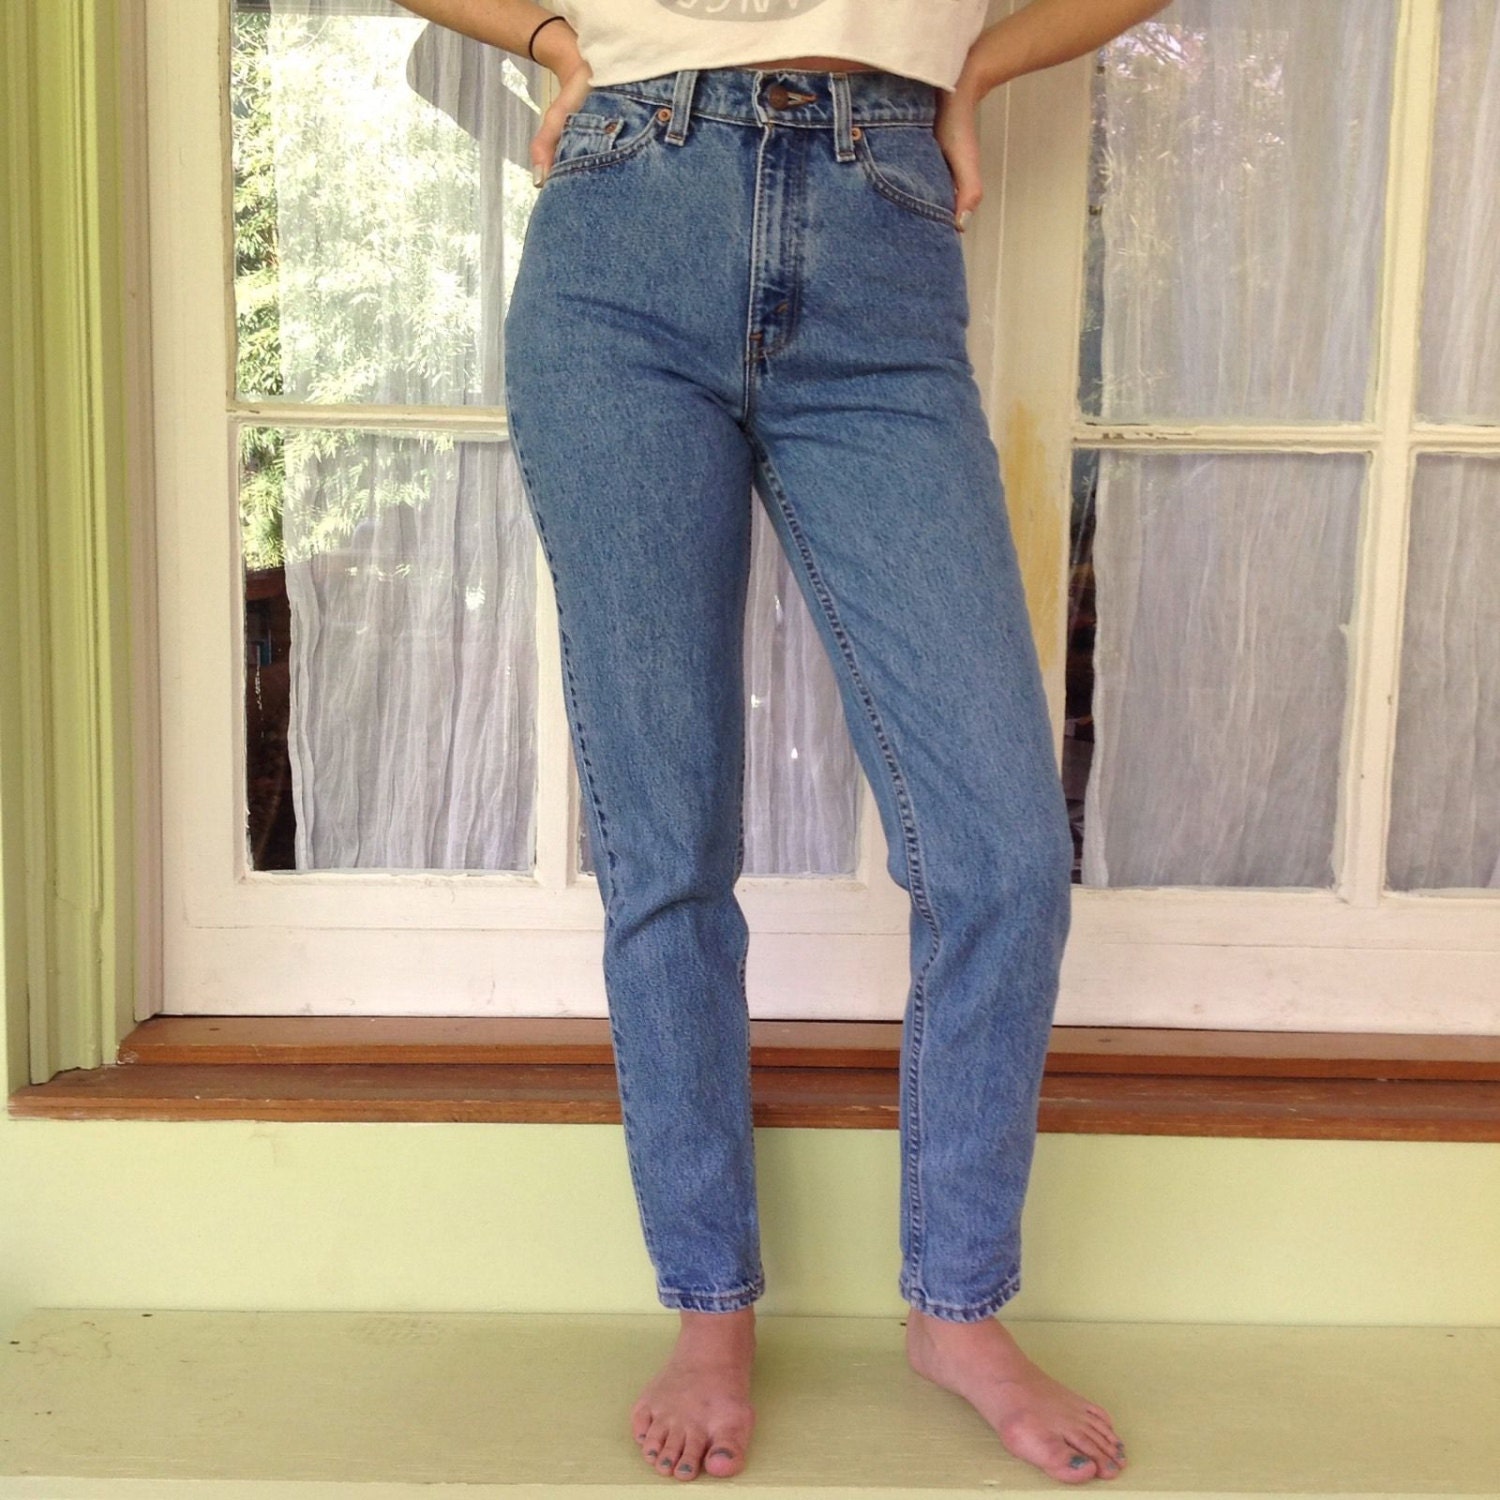 Hijsen Zielig Briljant LEVI'S HIGH WAIST Vintage Jeans Denim Medium Blue Wash - Etsy